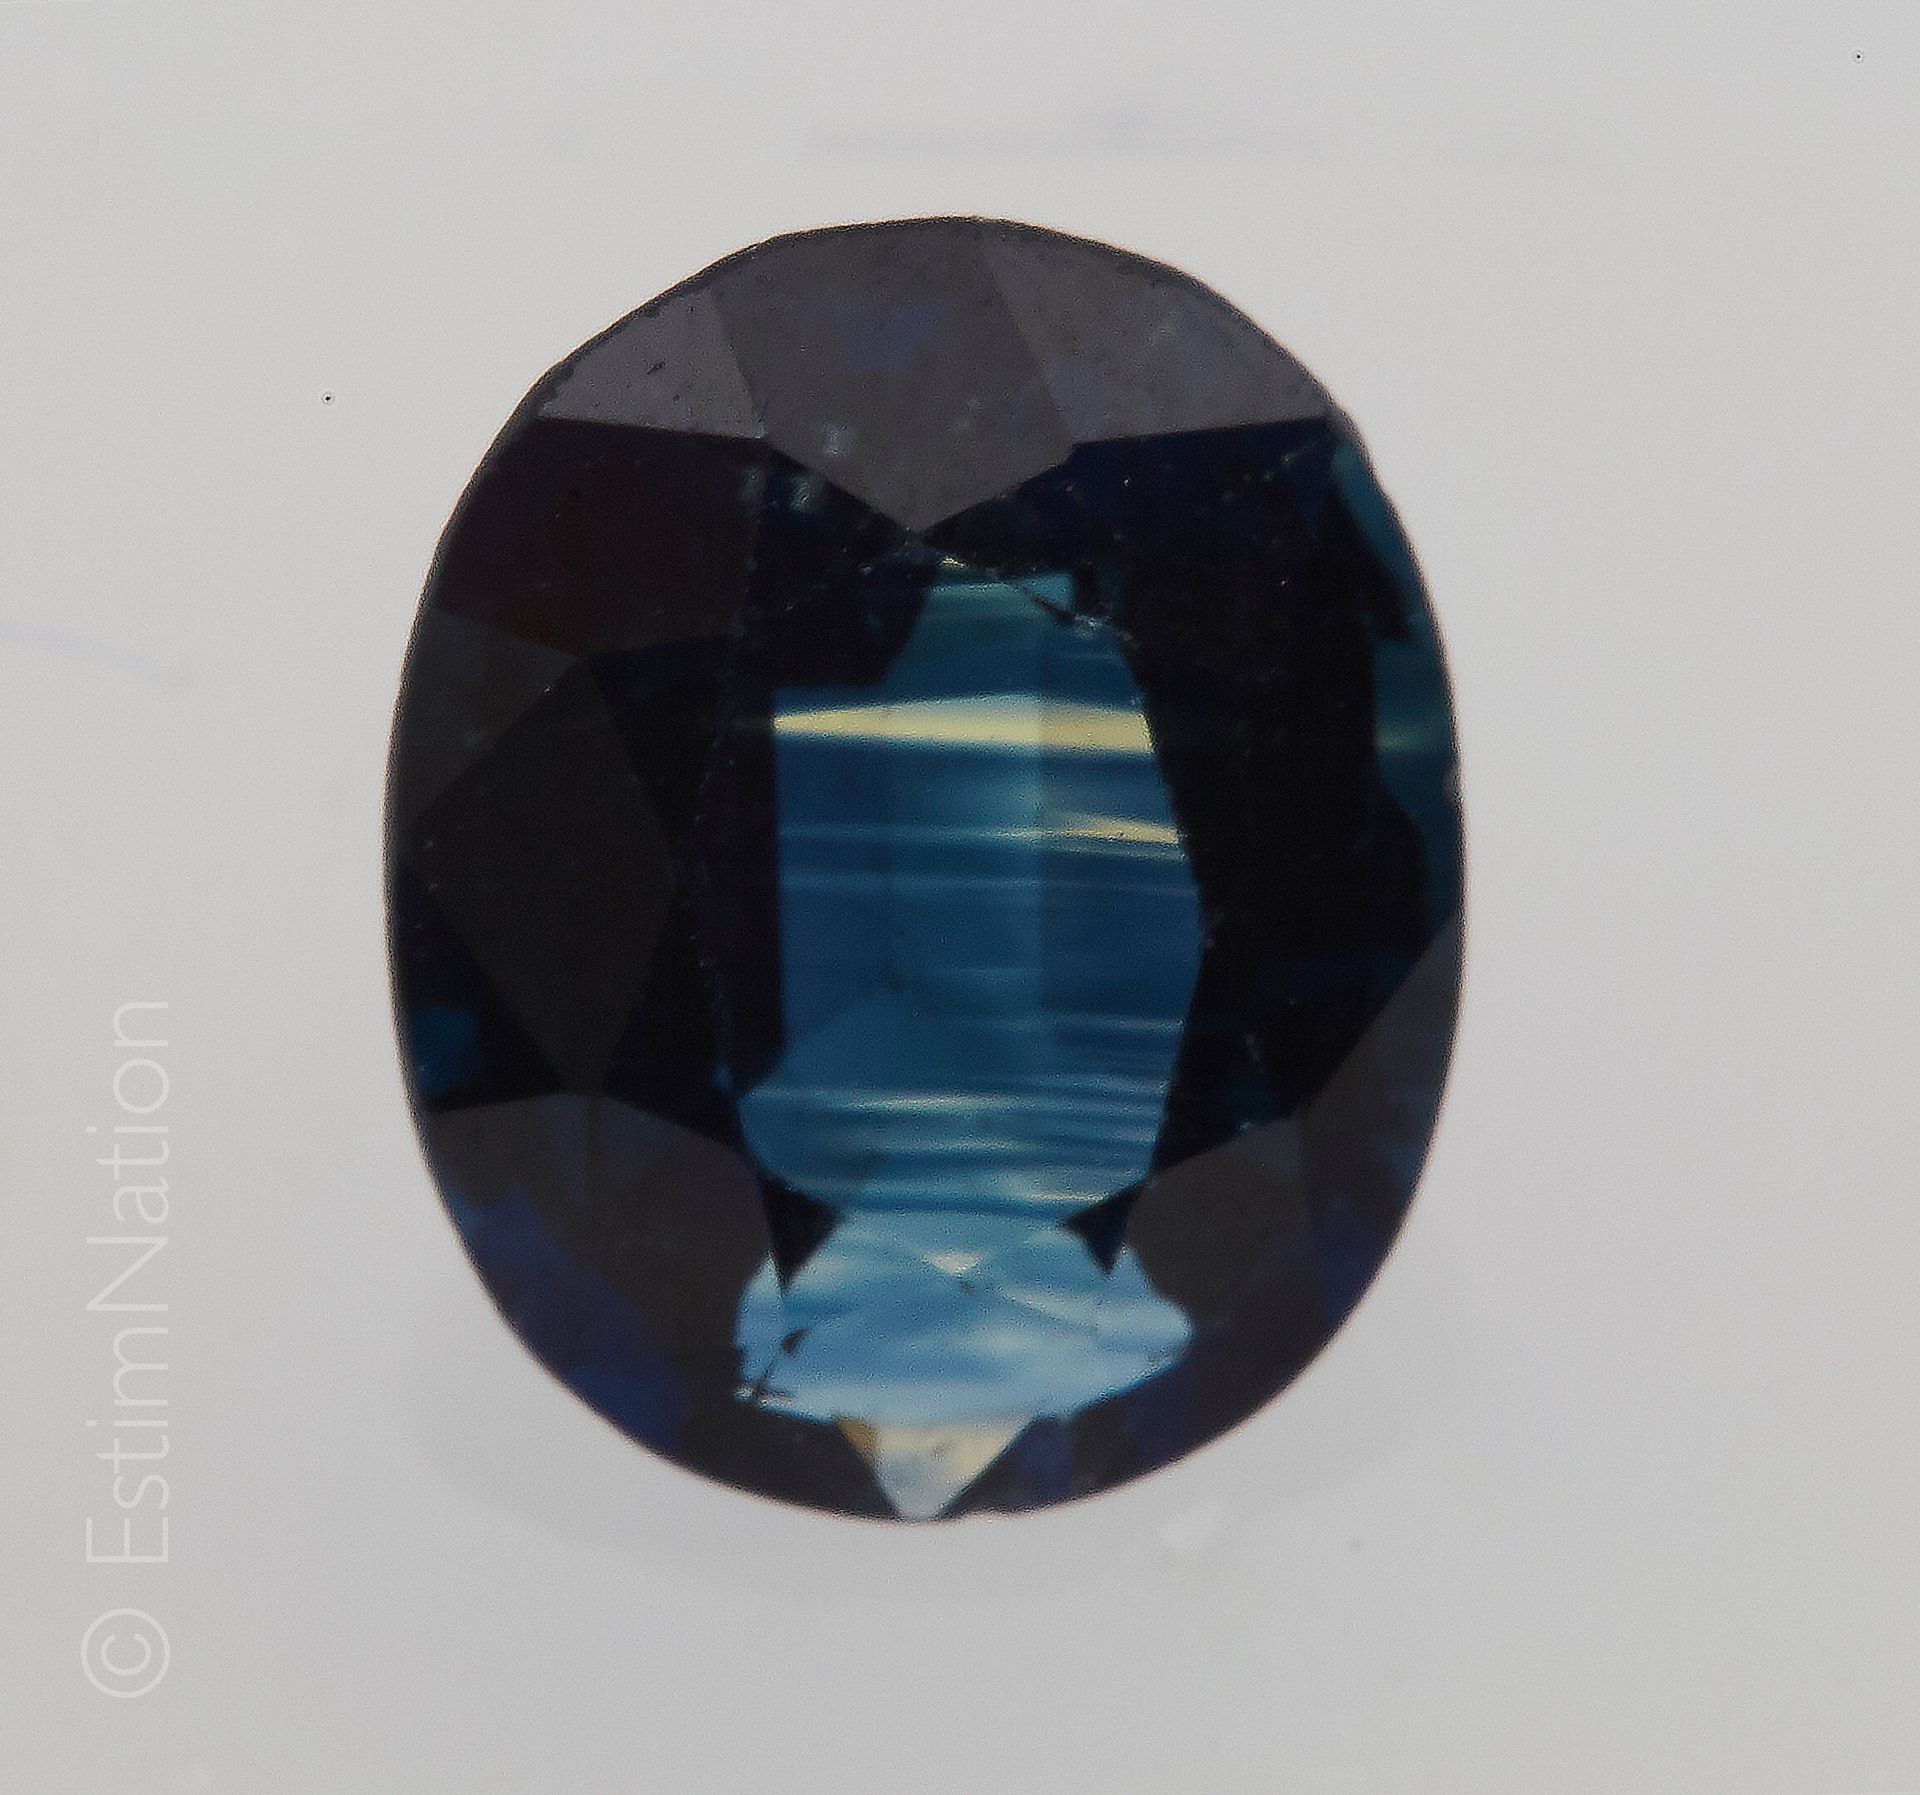 SAPHIR 纸上切割的椭圆蓝宝石

尺寸：7.80 x 6.30 x 3.50 mm左右。